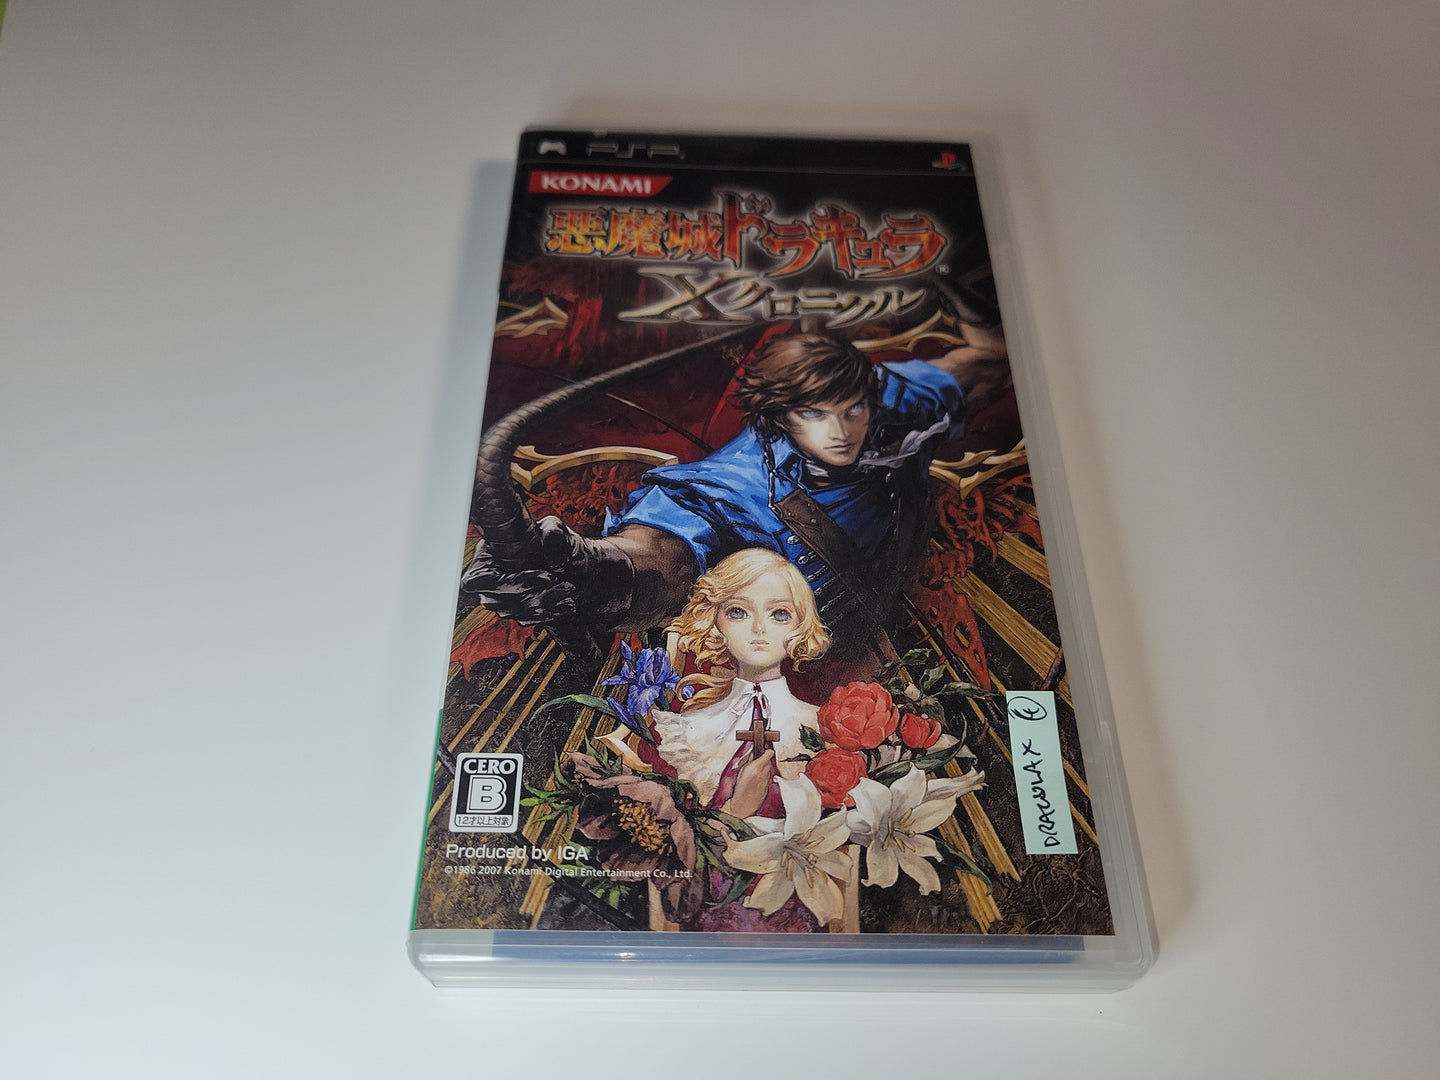 lee - Akumajo Dracula X Chronicle - Sony PSP Playstation Portable